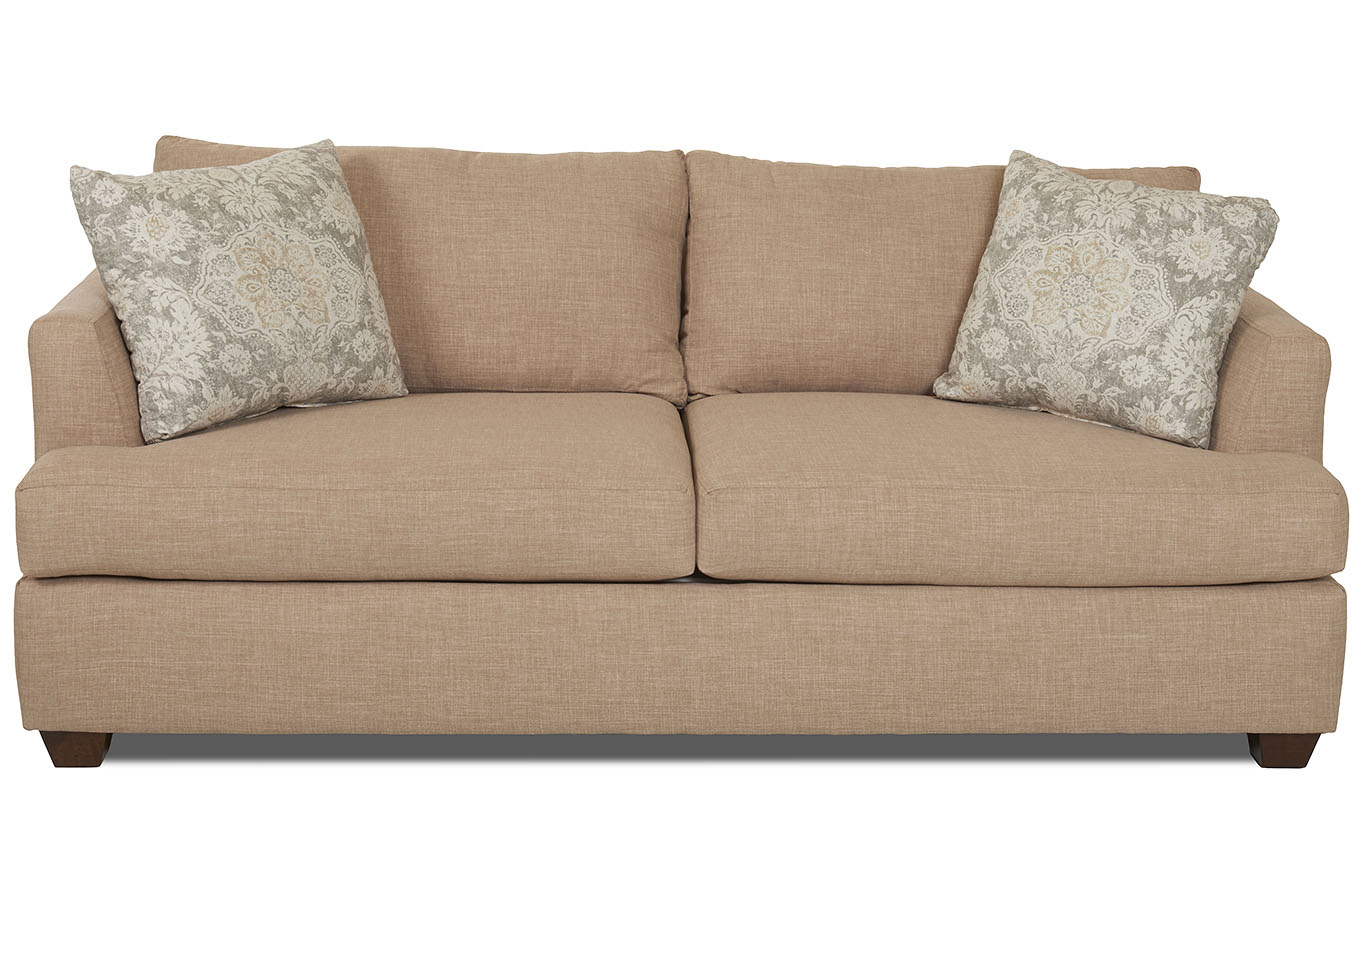 Jack Flax Stationary Fabric Sofa,Klaussner Home Furnishings